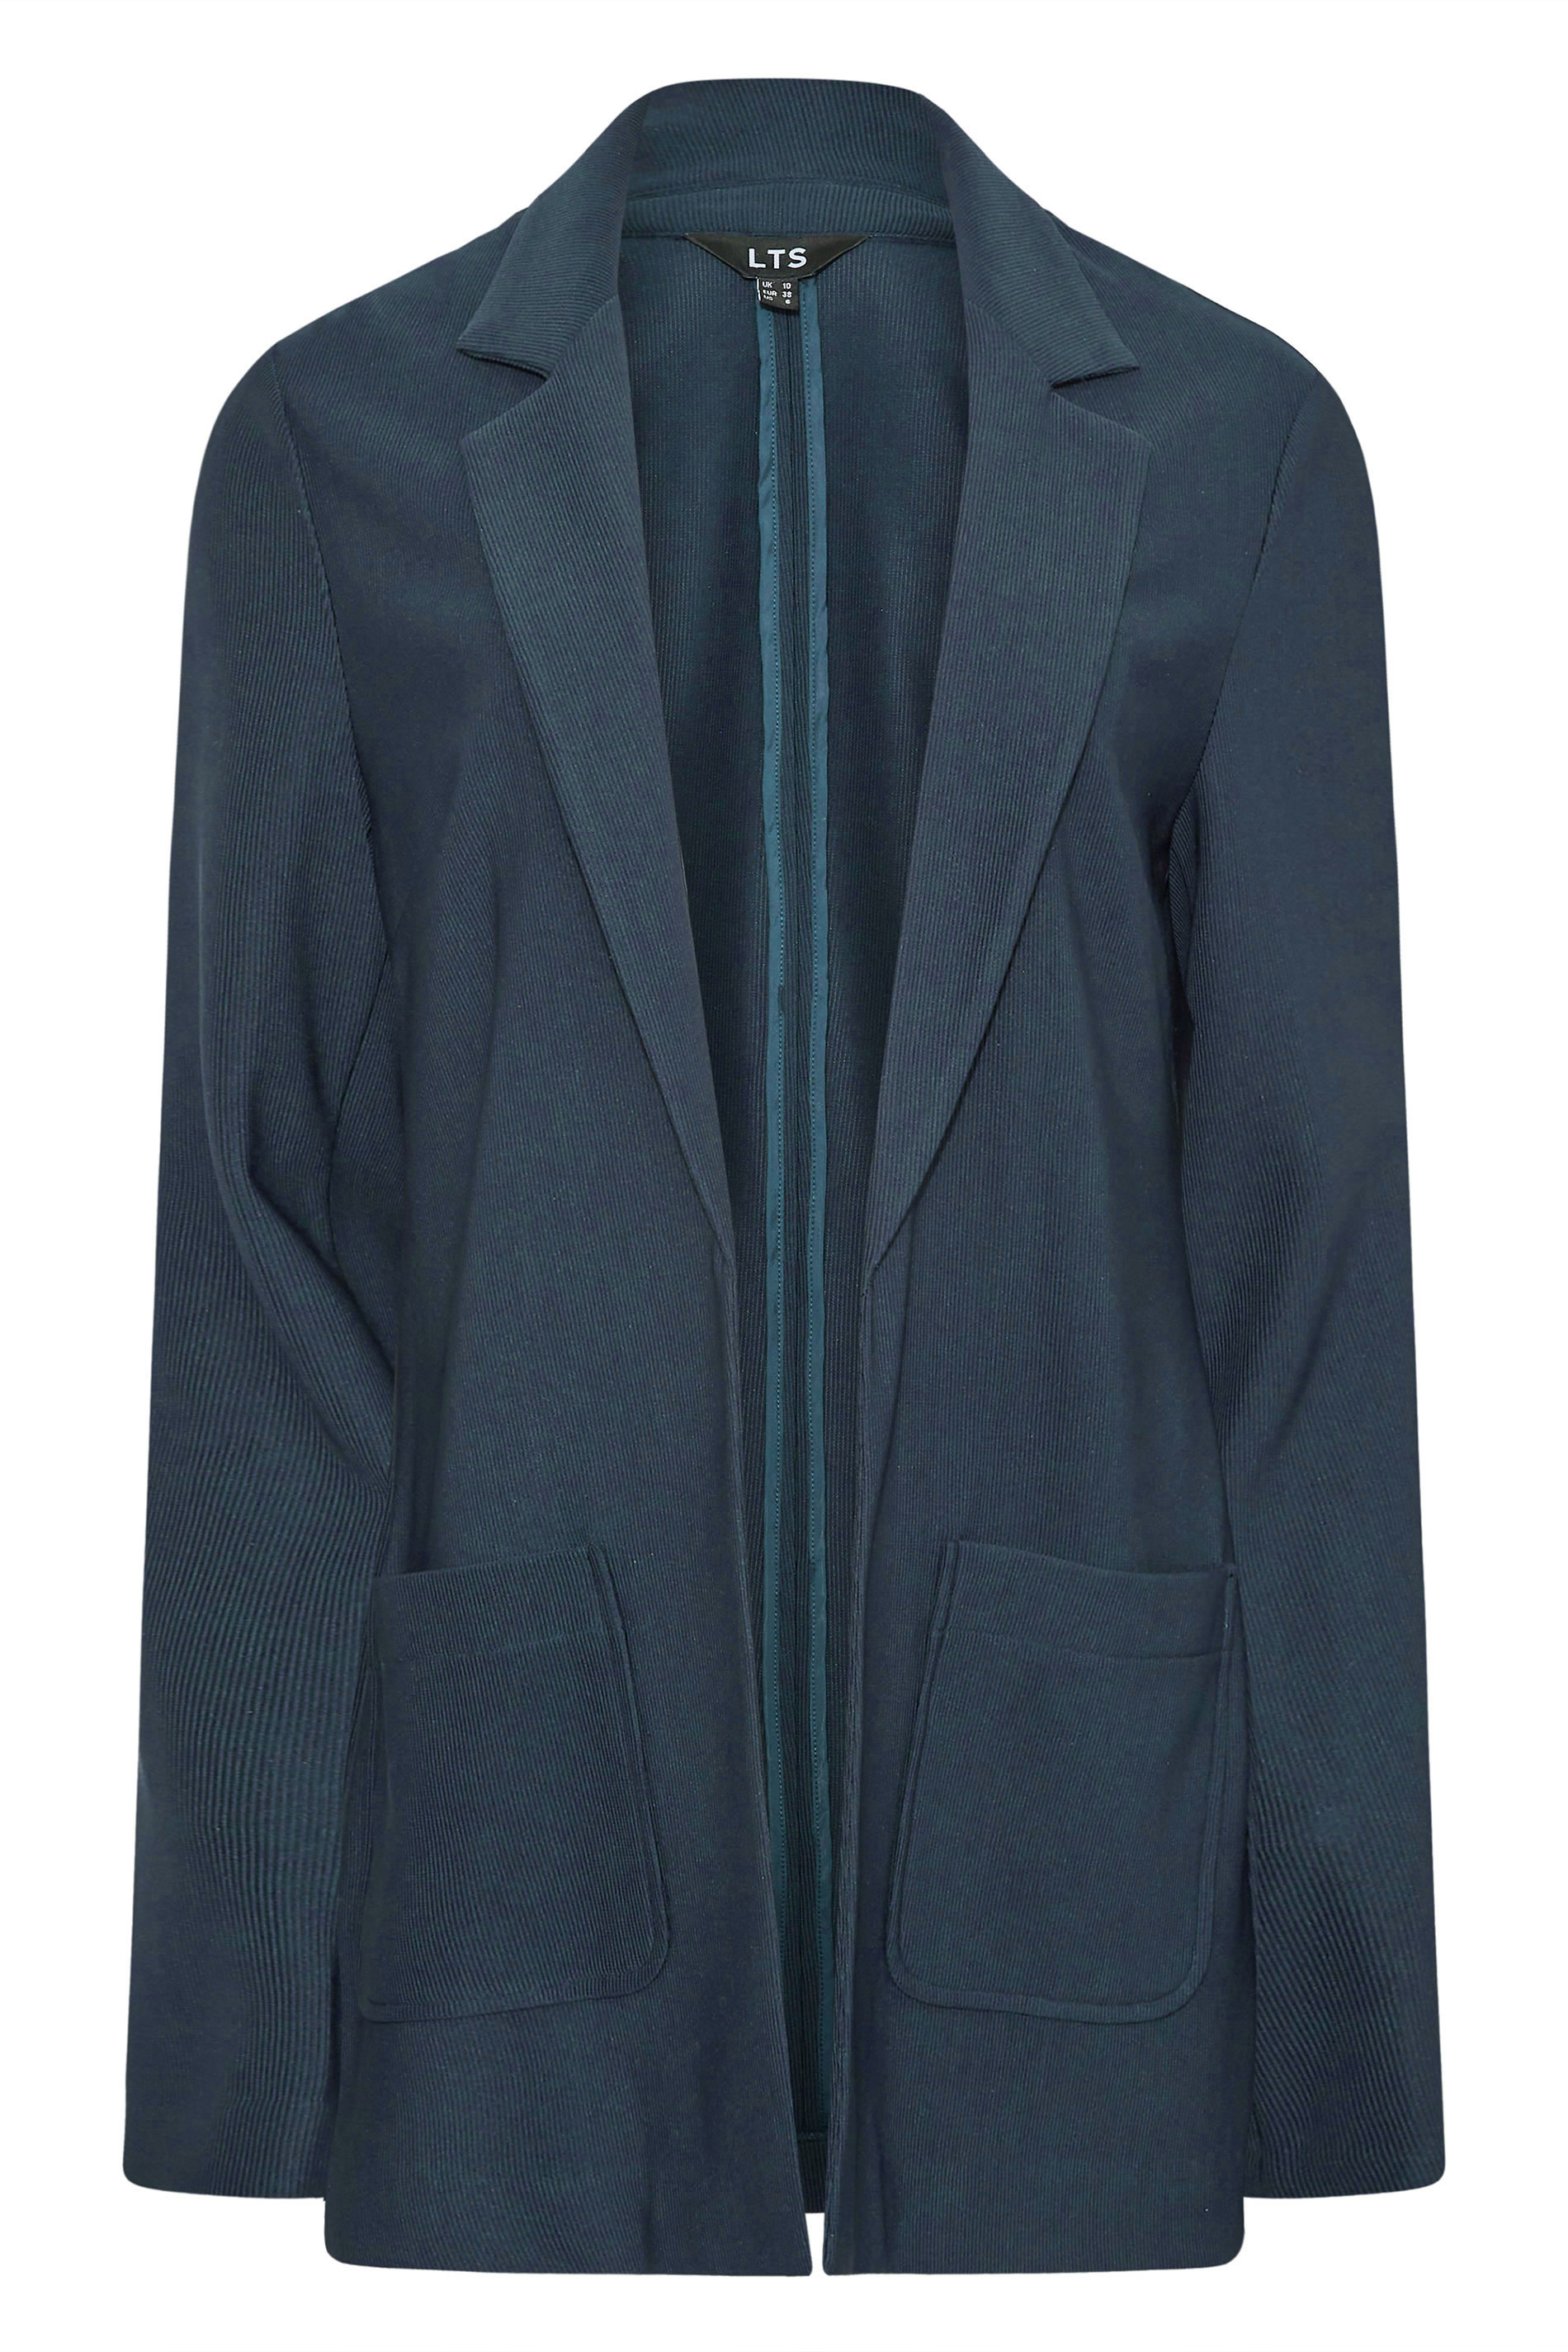 LTS Tall Women's Navy Blue Ribbed Blazer Jacket | Long Tall Sally  2